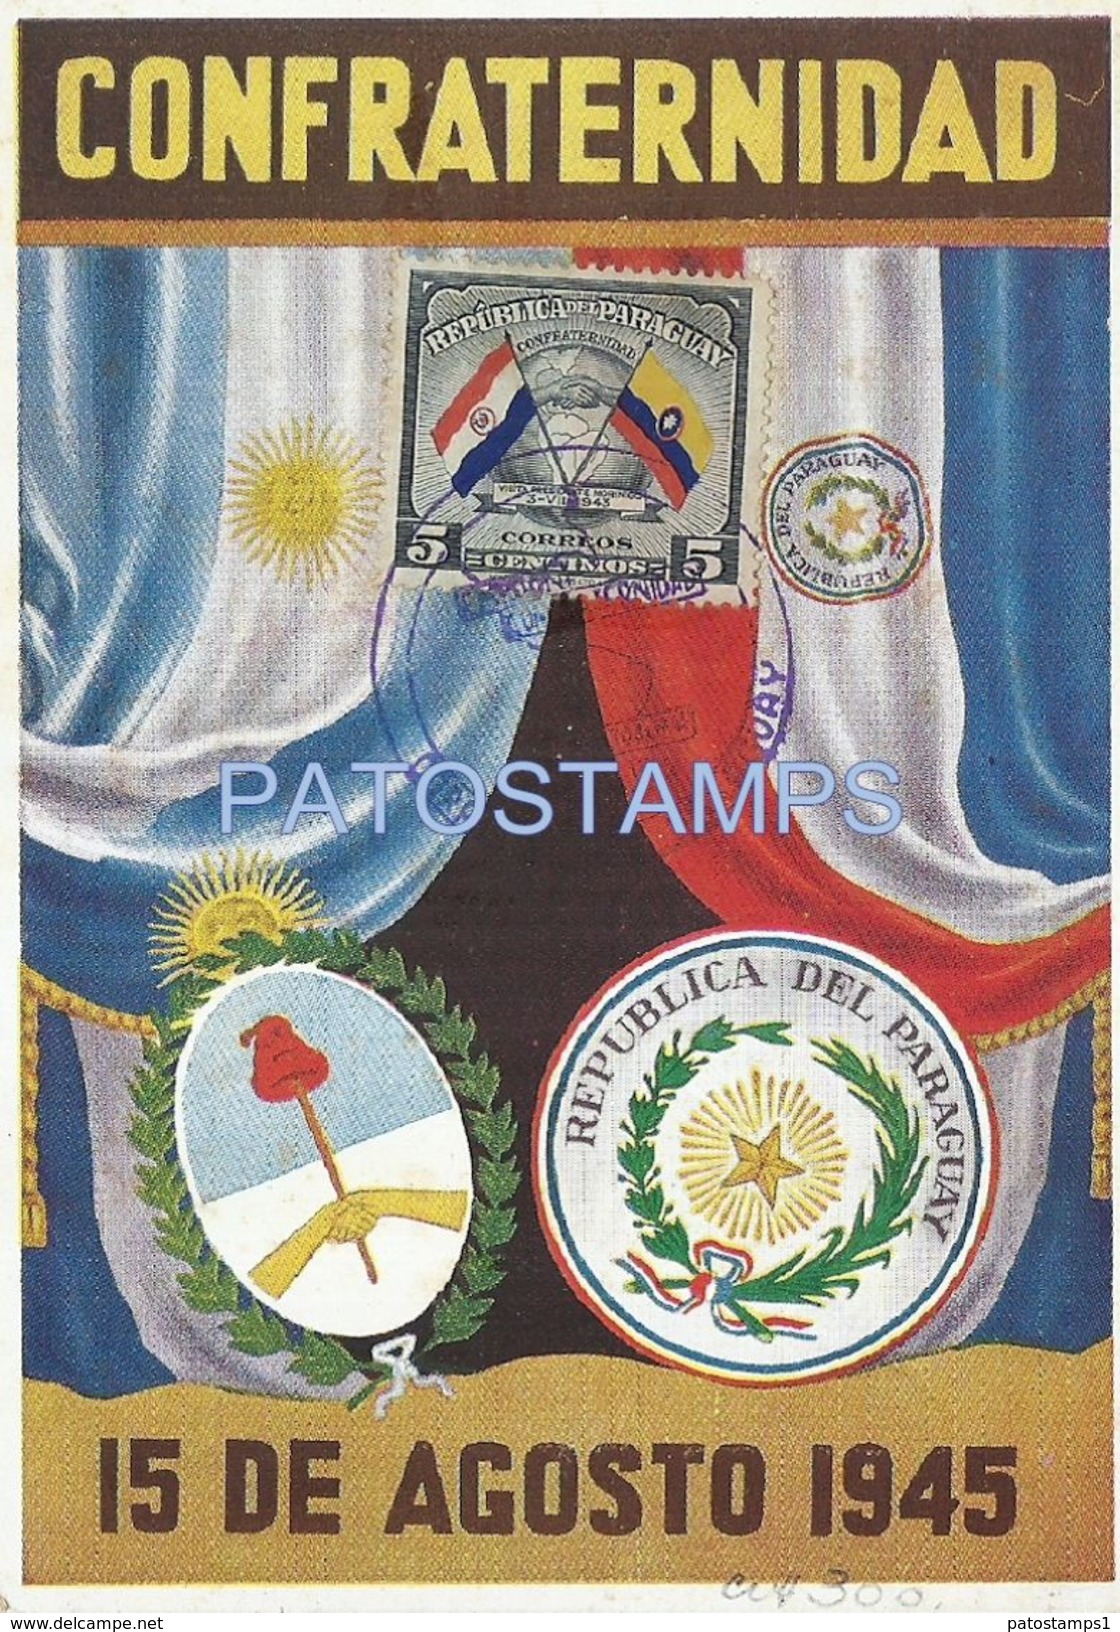 83811 PARAGUAY ARGENTINA CONFRATERNIDAD FLAG & HERALDRY AÑO 1945 NO POSTAL POSTCARD - Paraguay